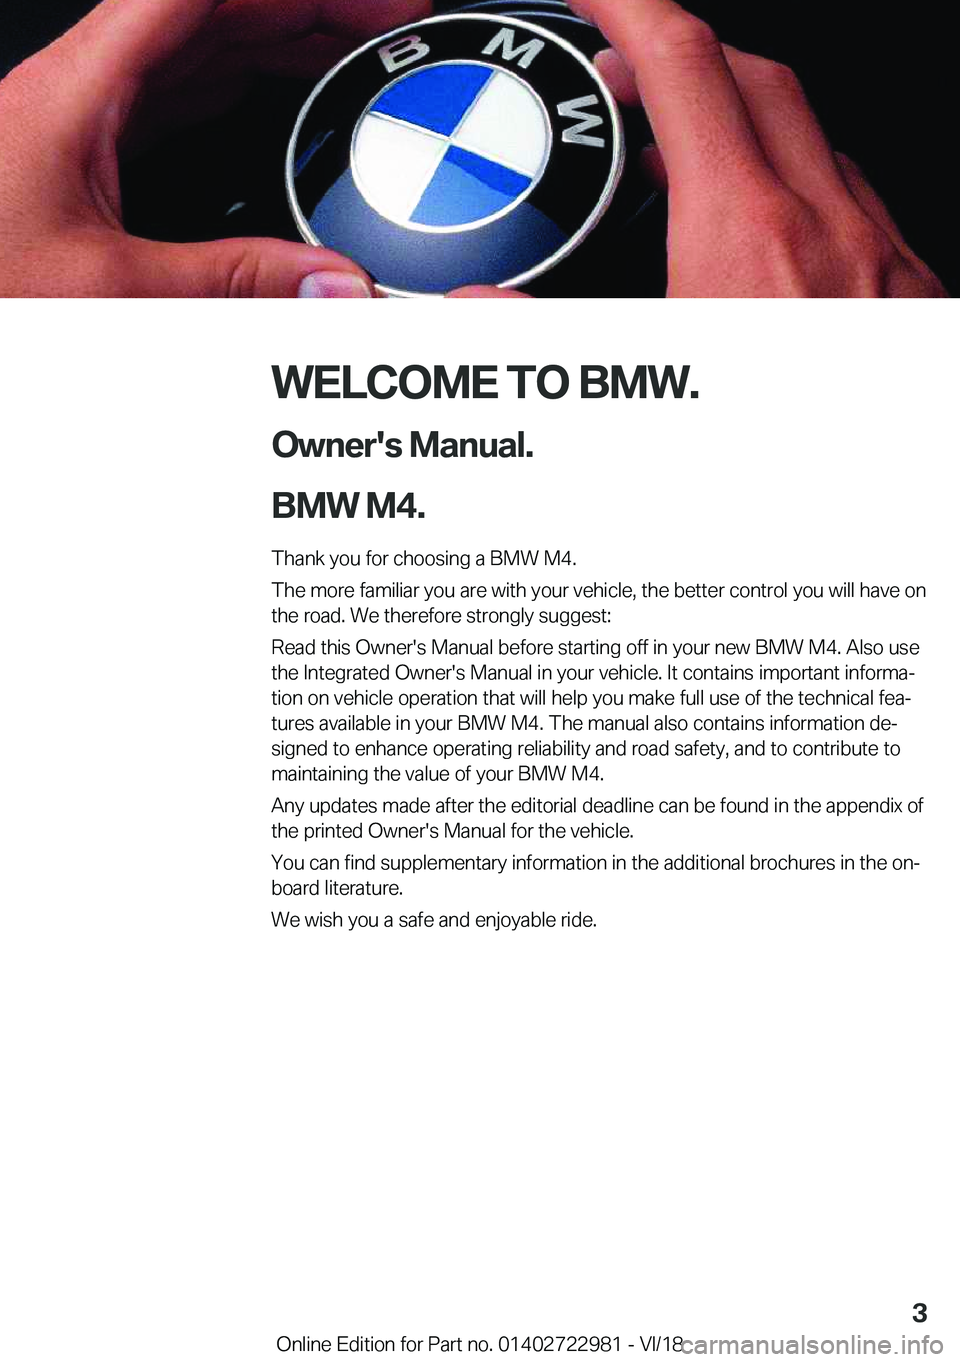 BMW M4 2019  Owners Manual �W�E�L�C�O�M�E��T�O��B�M�W�.�O�w�n�e�r�'�s��M�a�n�u�a�l�.
�B�M�W��M�4�.
�T�h�a�n�k��y�o�u��f�o�r��c�h�o�o�s�i�n�g��a��B�M�W��M�4�.
�T�h�e��m�o�r�e��f�a�m�i�l�i�a�r��y�o�u��a�r�e��w�